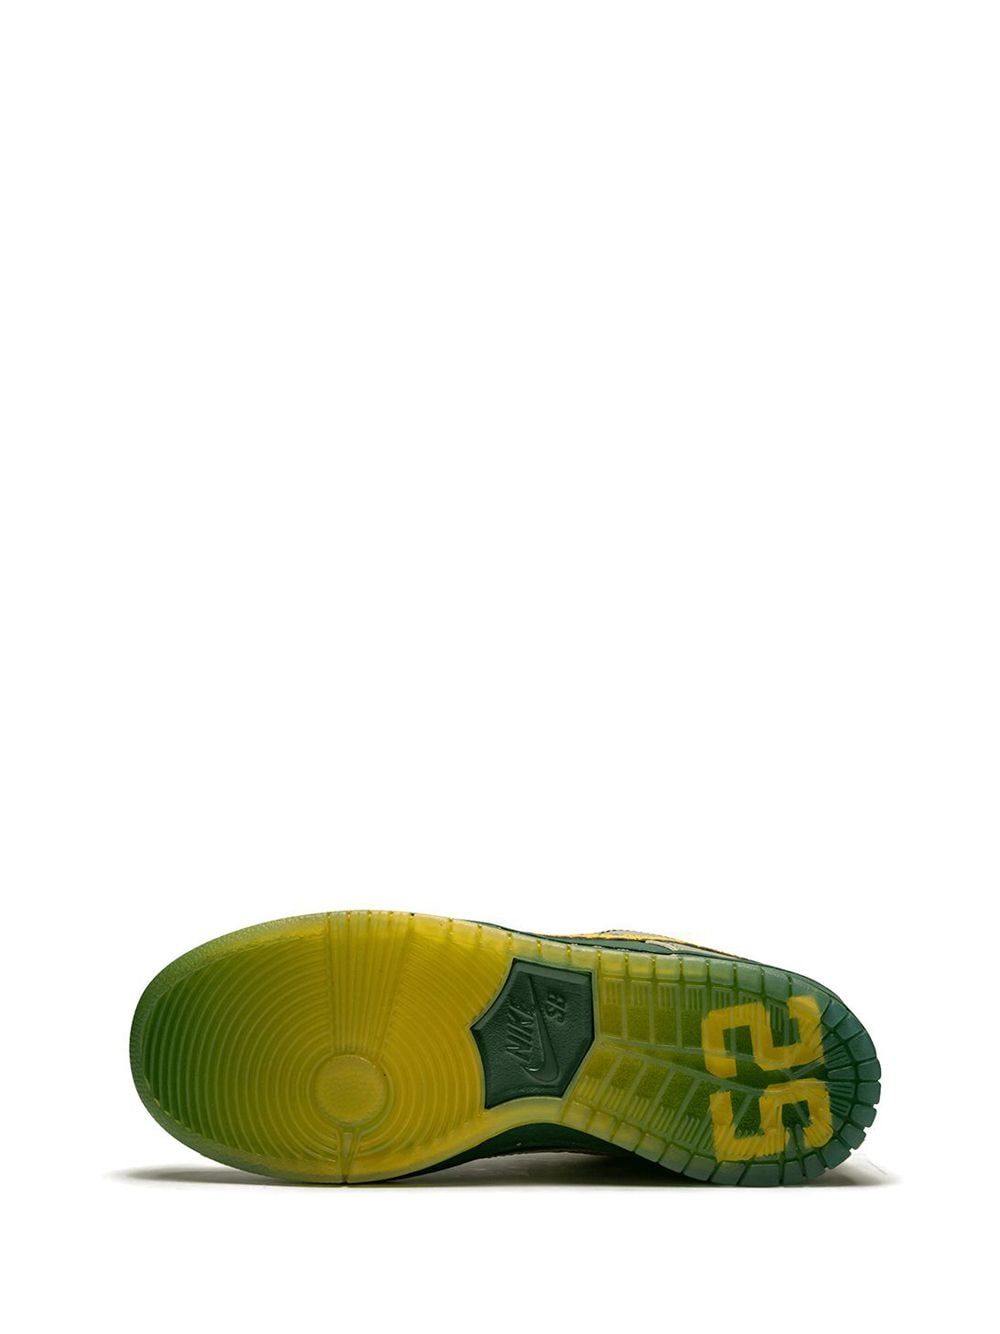 Nike x Doernbecher SB Dunk sneakers